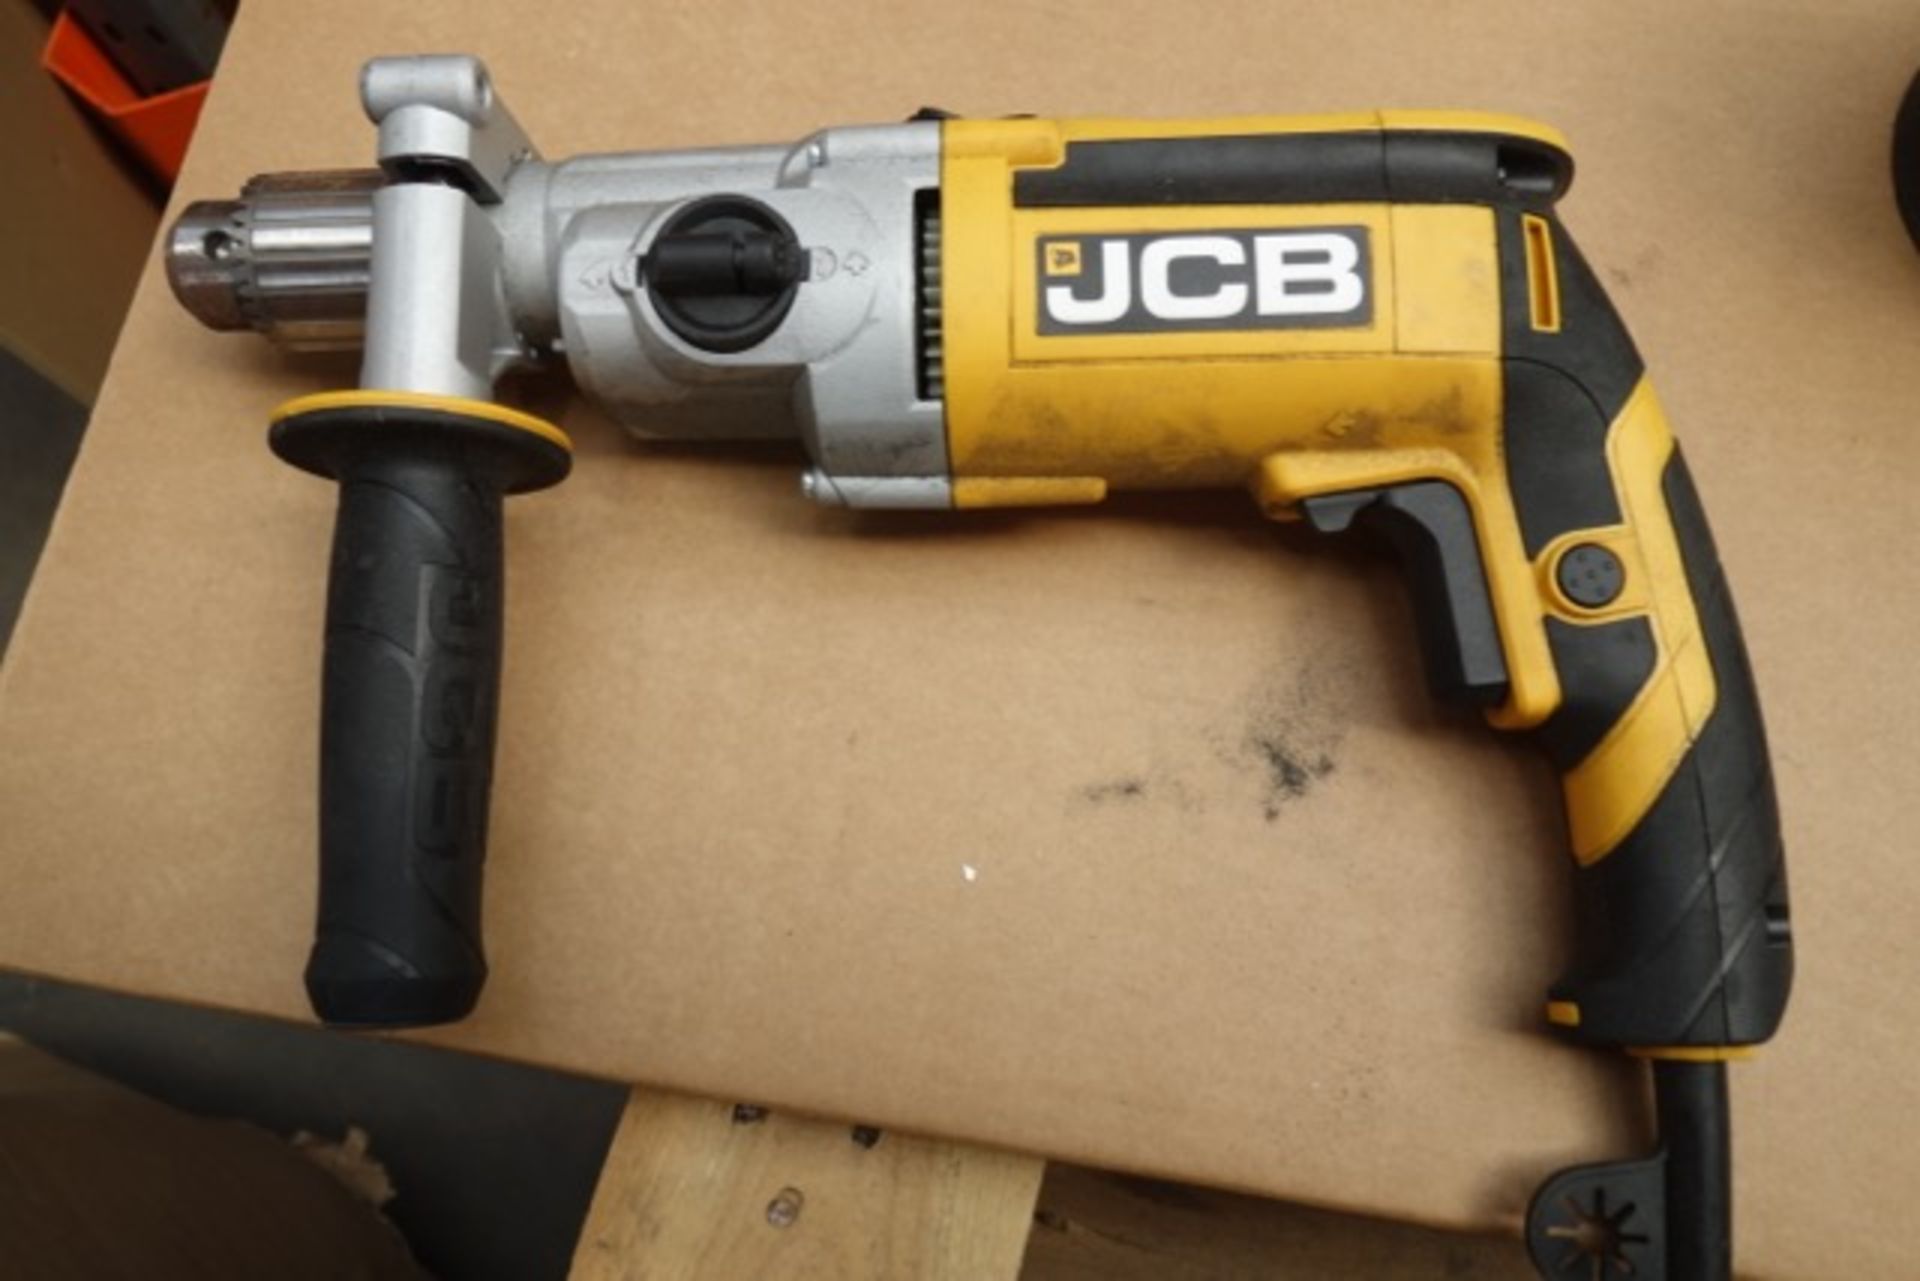 (D13) JCB 900w Hammer Drill. Note: Ex-display item, power cord has been cut.